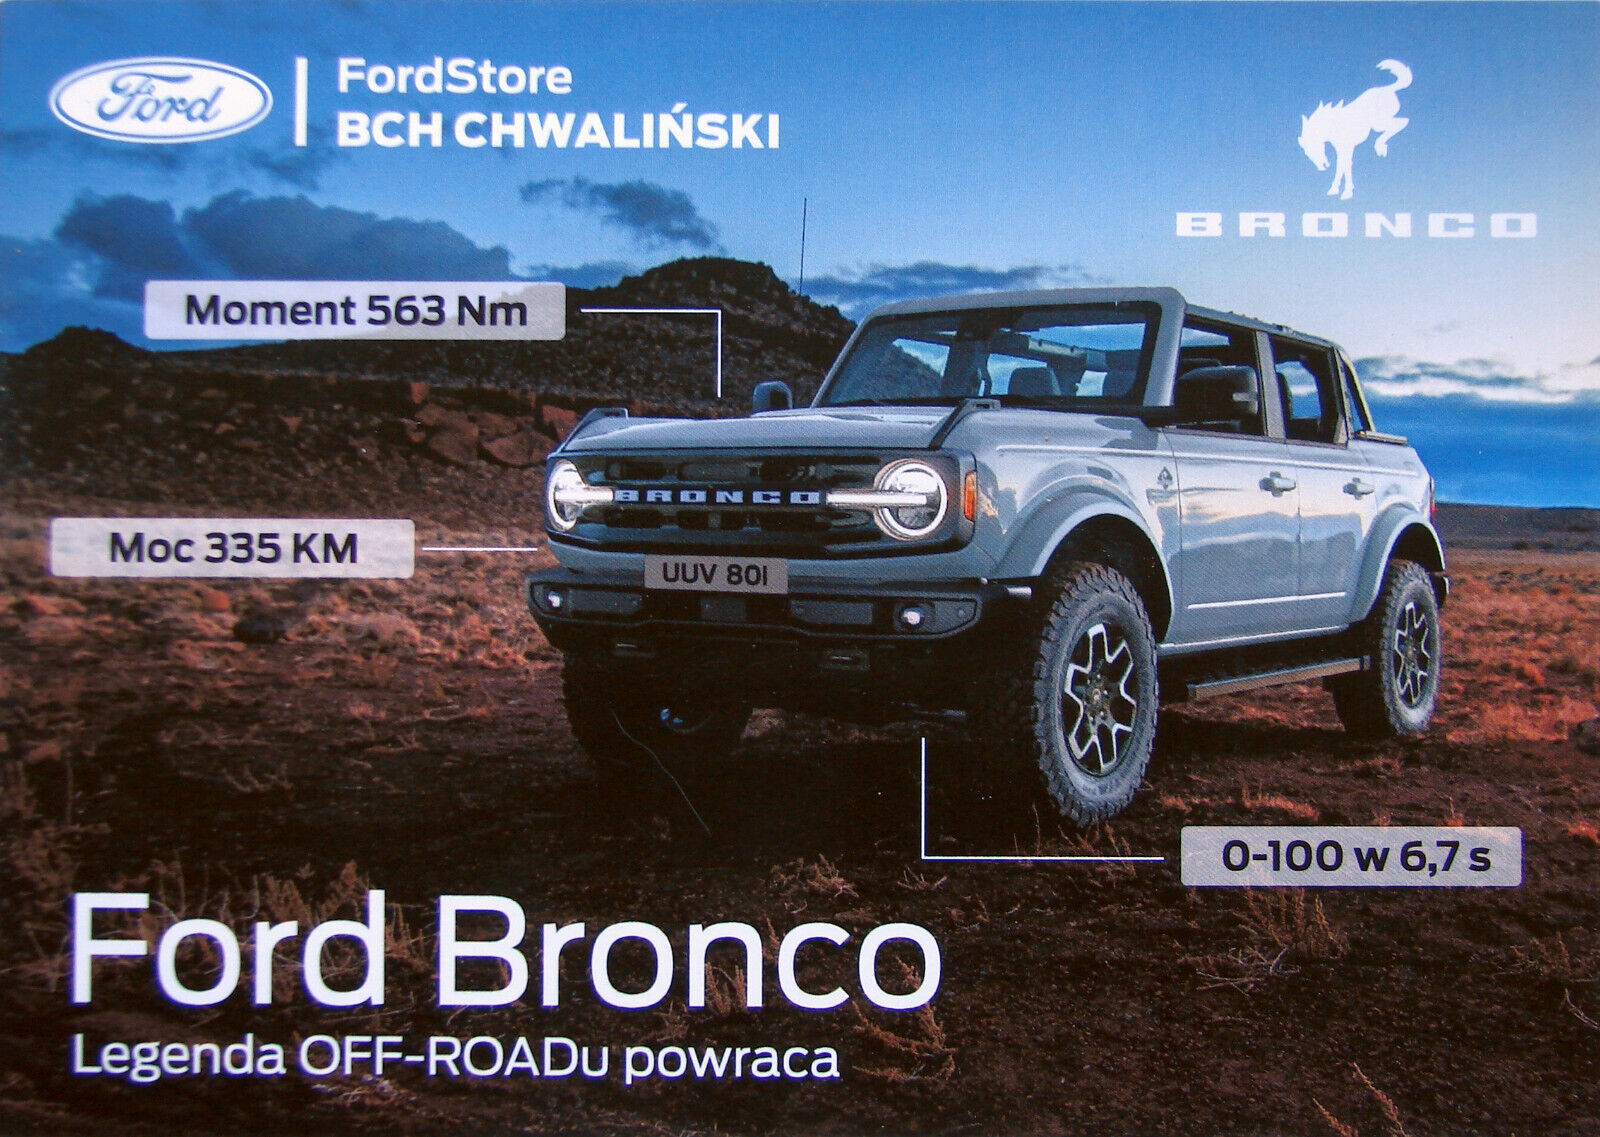 2023 MY Ford Bronco  brochure  European